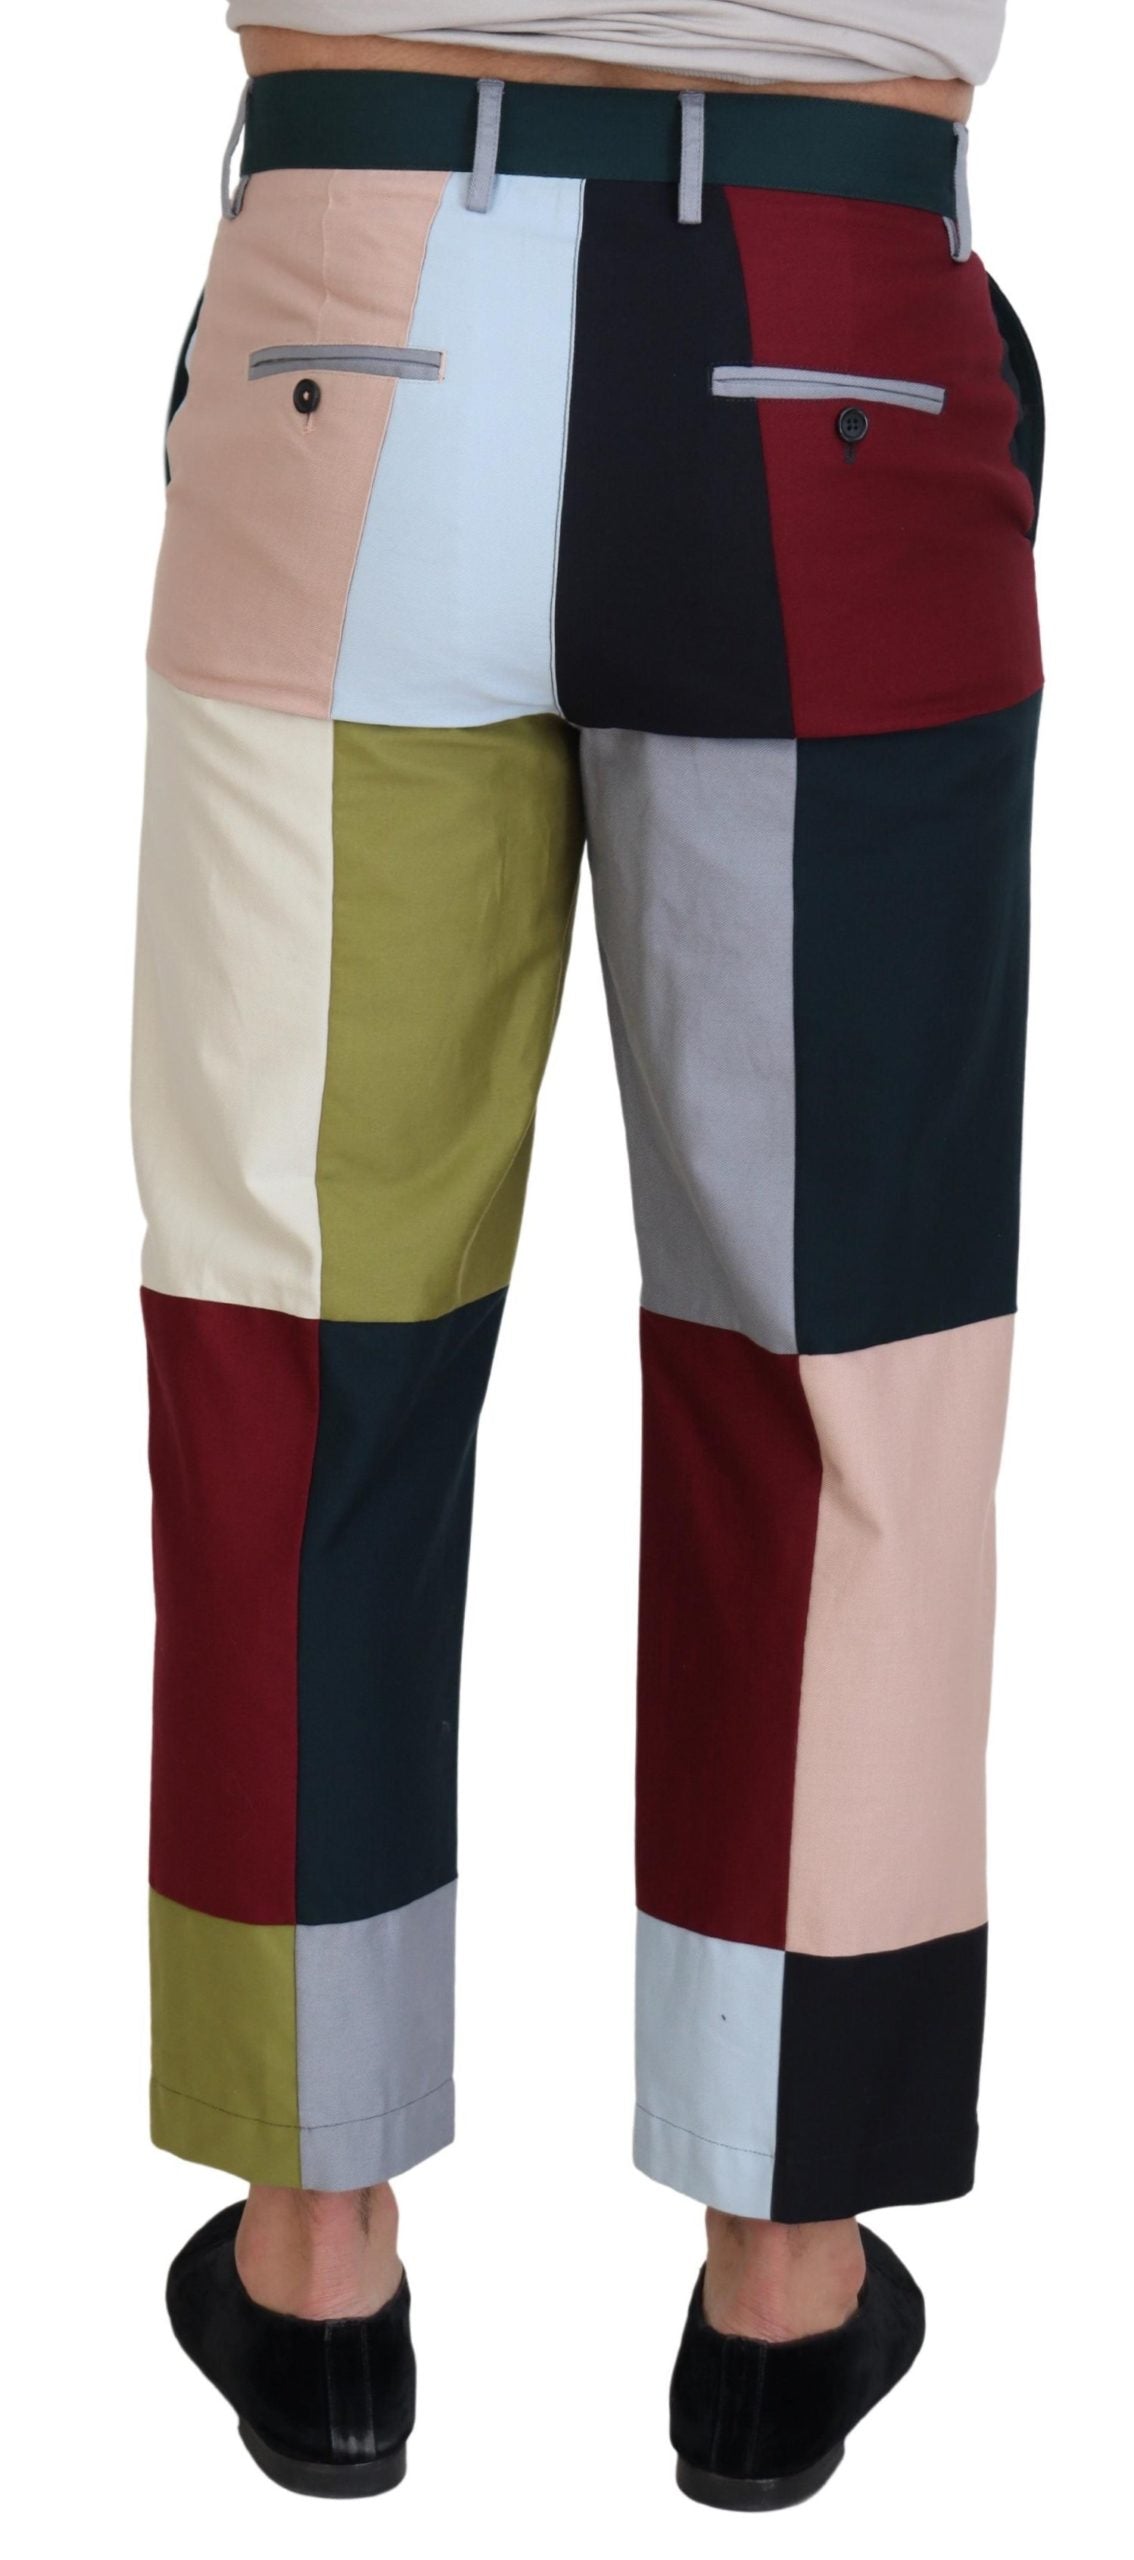 Dolce & Gabbana Stunning Multicolor Patchwork Pants